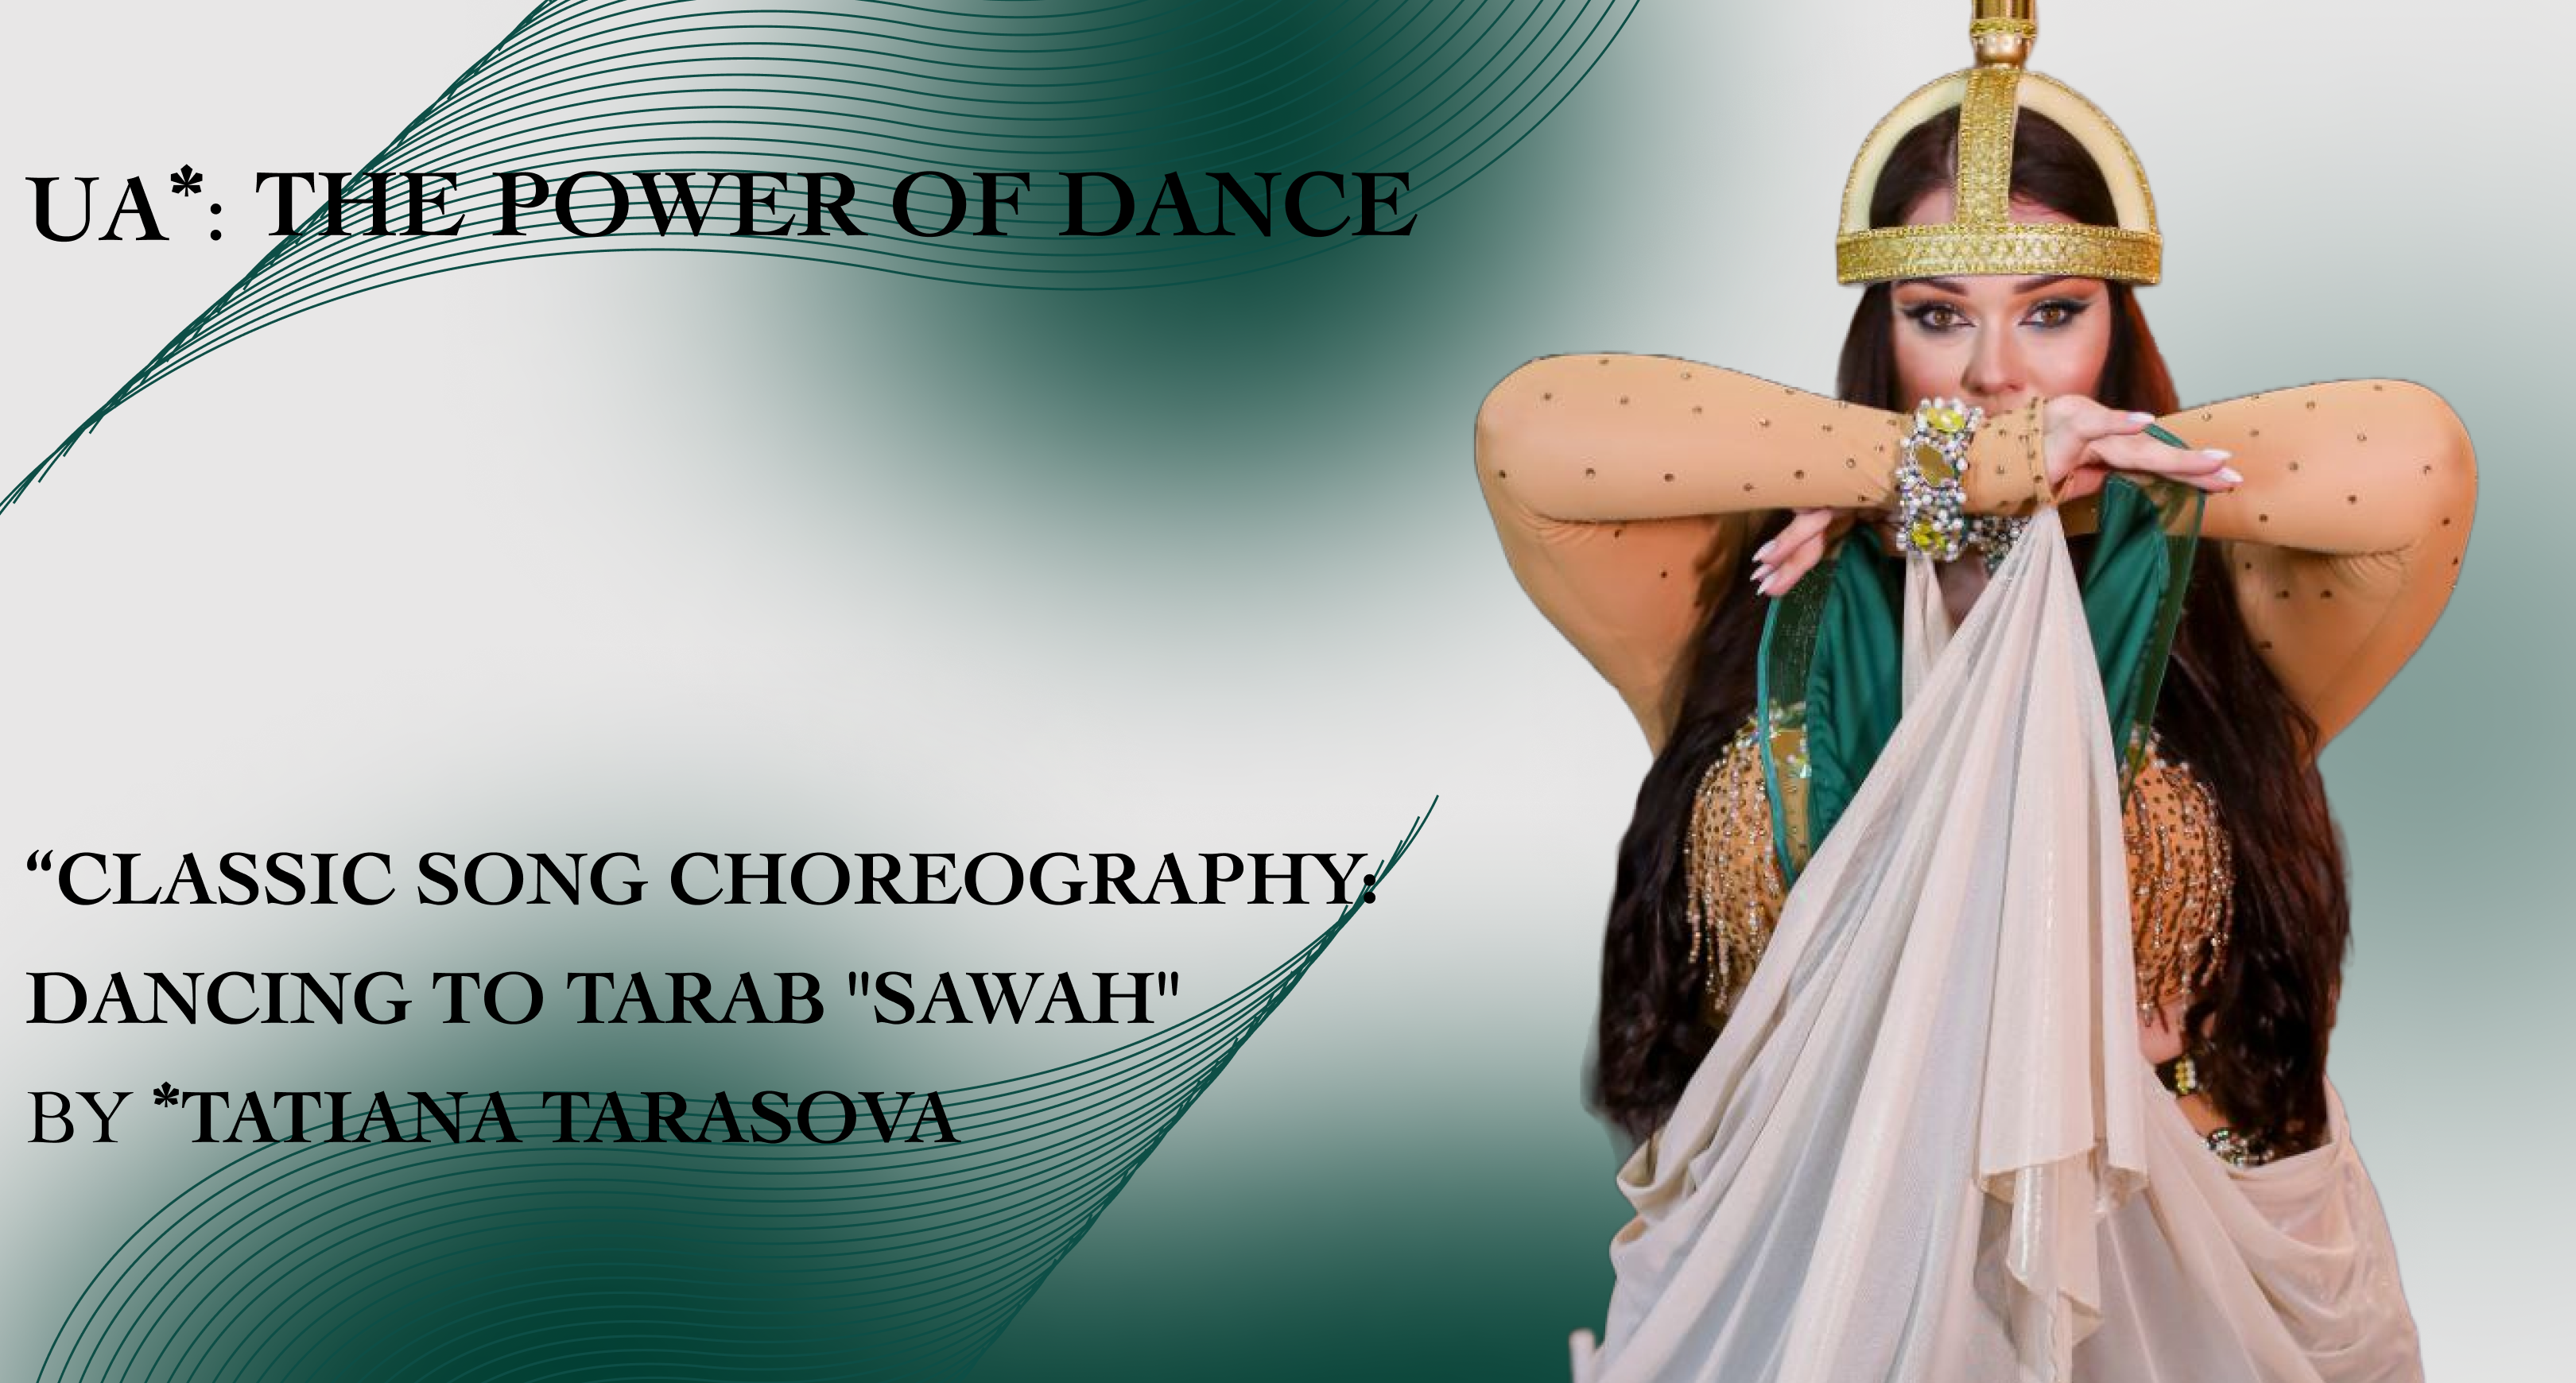 UA*: THE POWER OF DANCE: “Classic song choreography: dancing to Tarab “Sawah” by Tatiana Tarasova